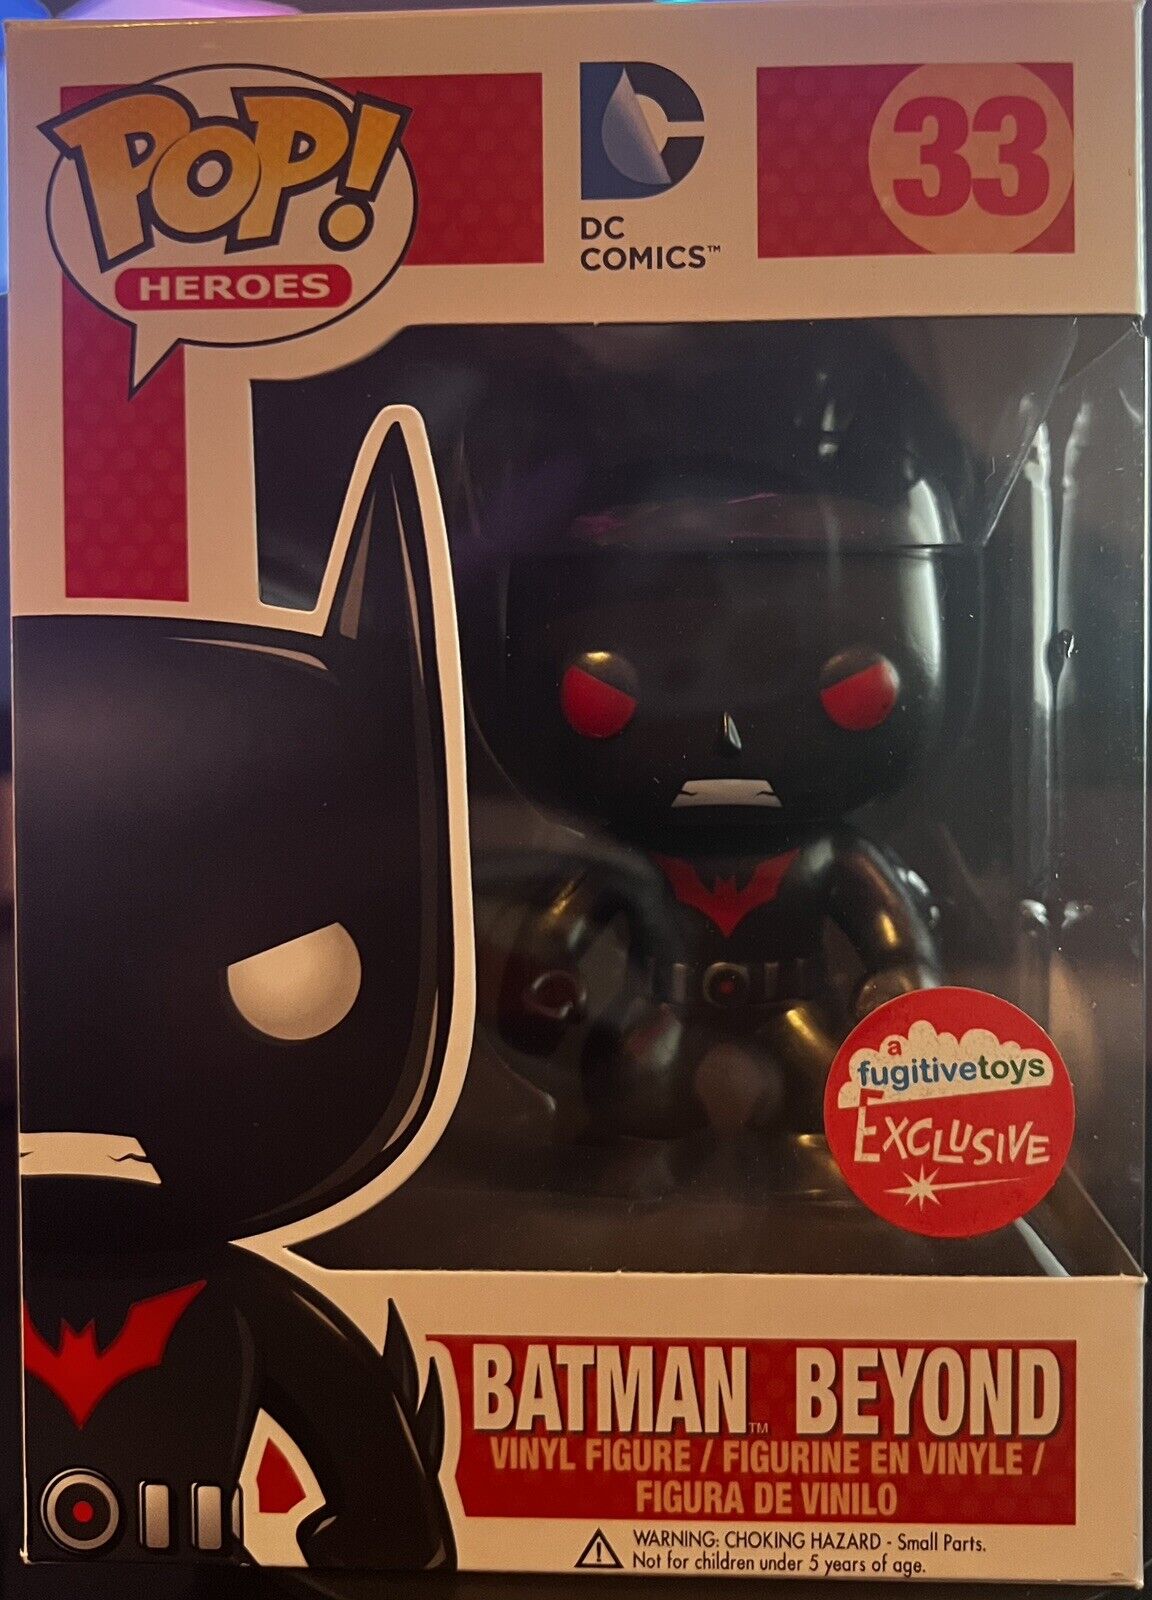 Batman Beyond #33 Metallic Fugitive Toys Exclusive Funko POP Heroes